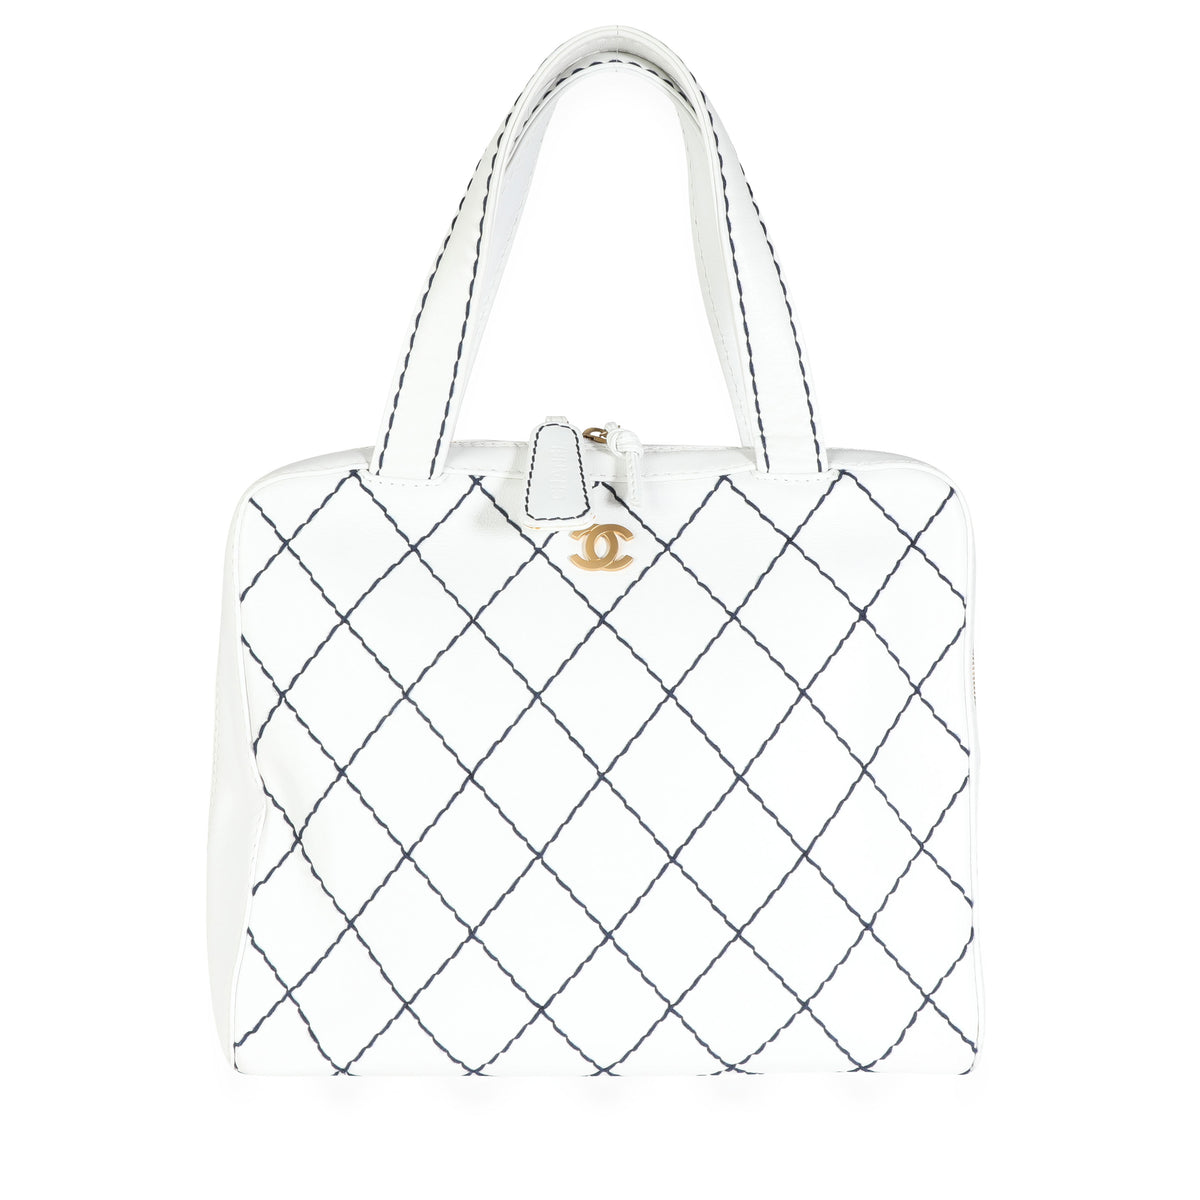 Chanel Surpique Small Tote Bag